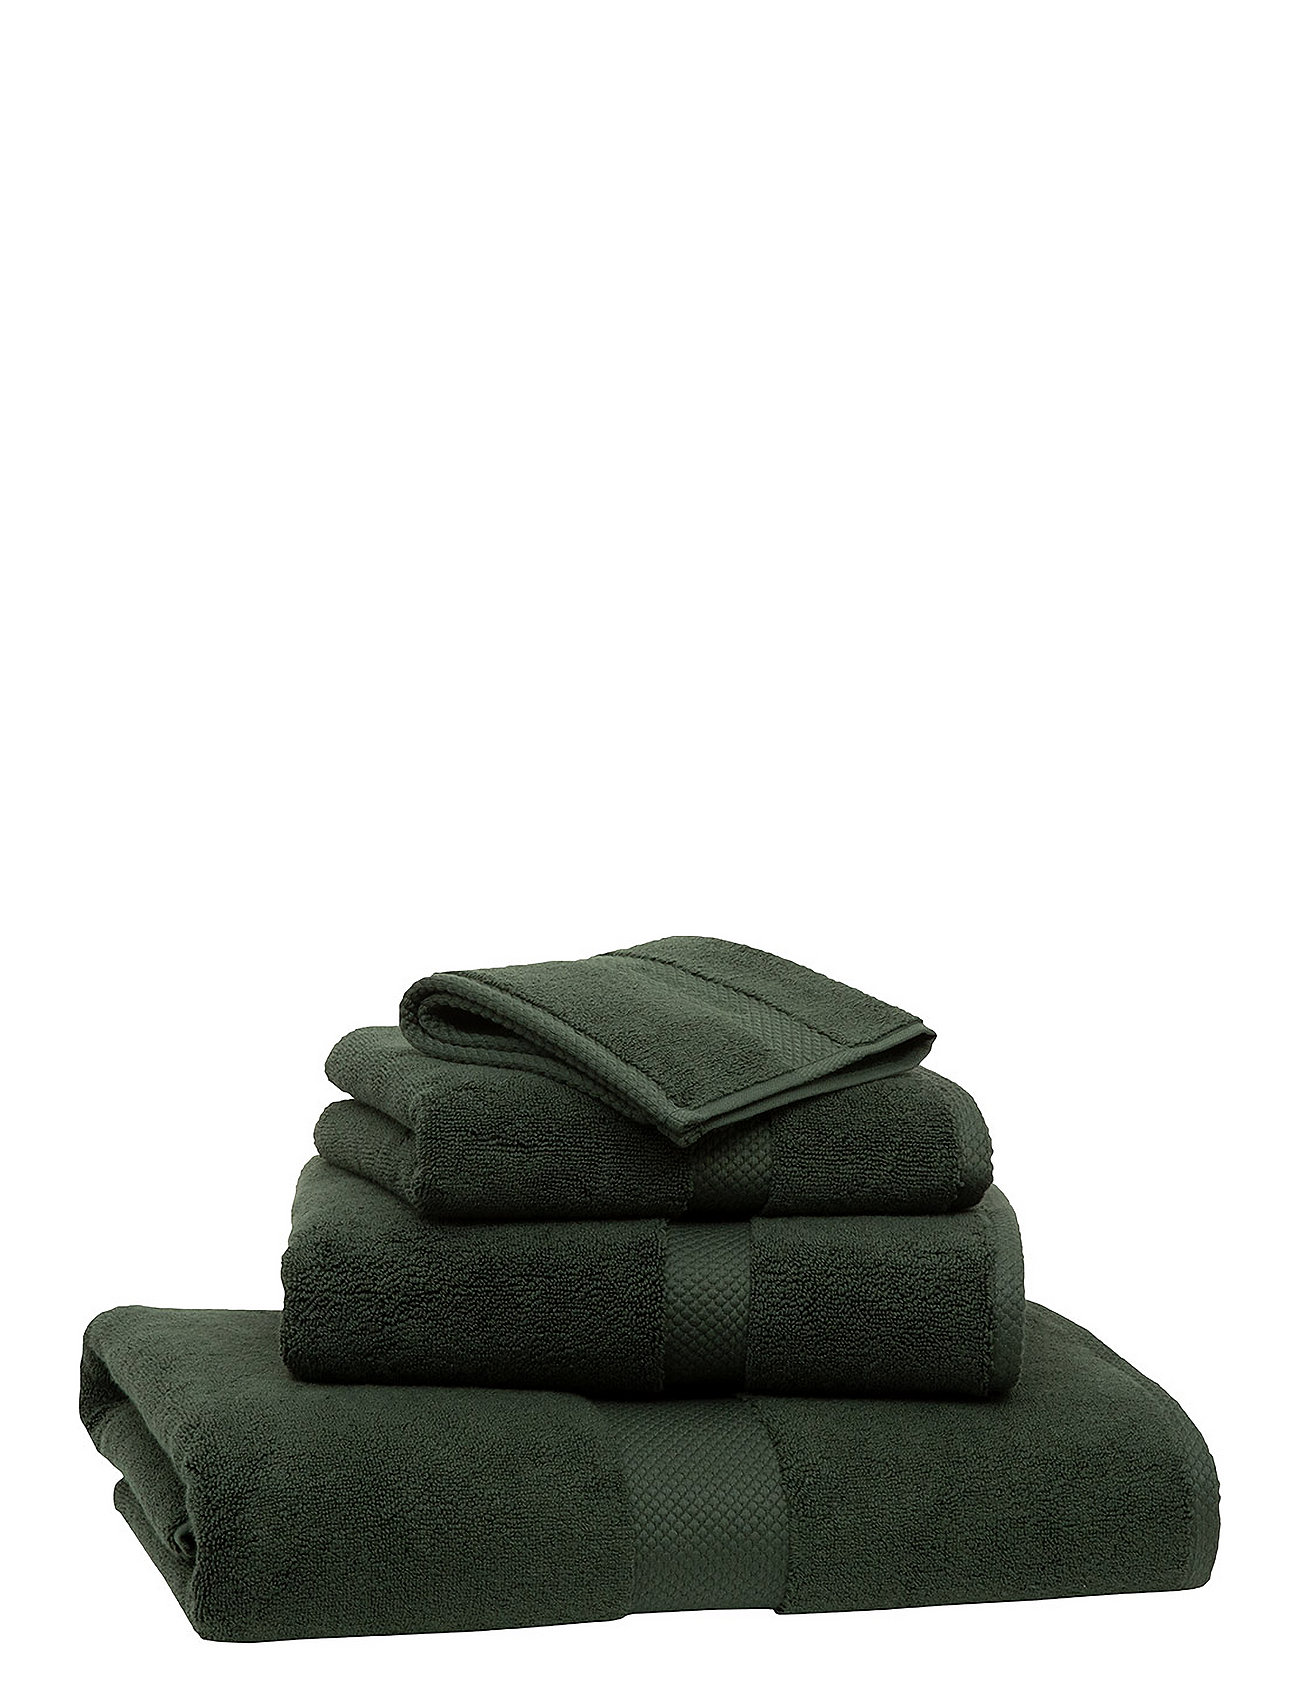 Avenue Wash Towel Home Textiles Bathroom Textiles Towels & Bath Towels Face Towels Green Ralph Lauren Home